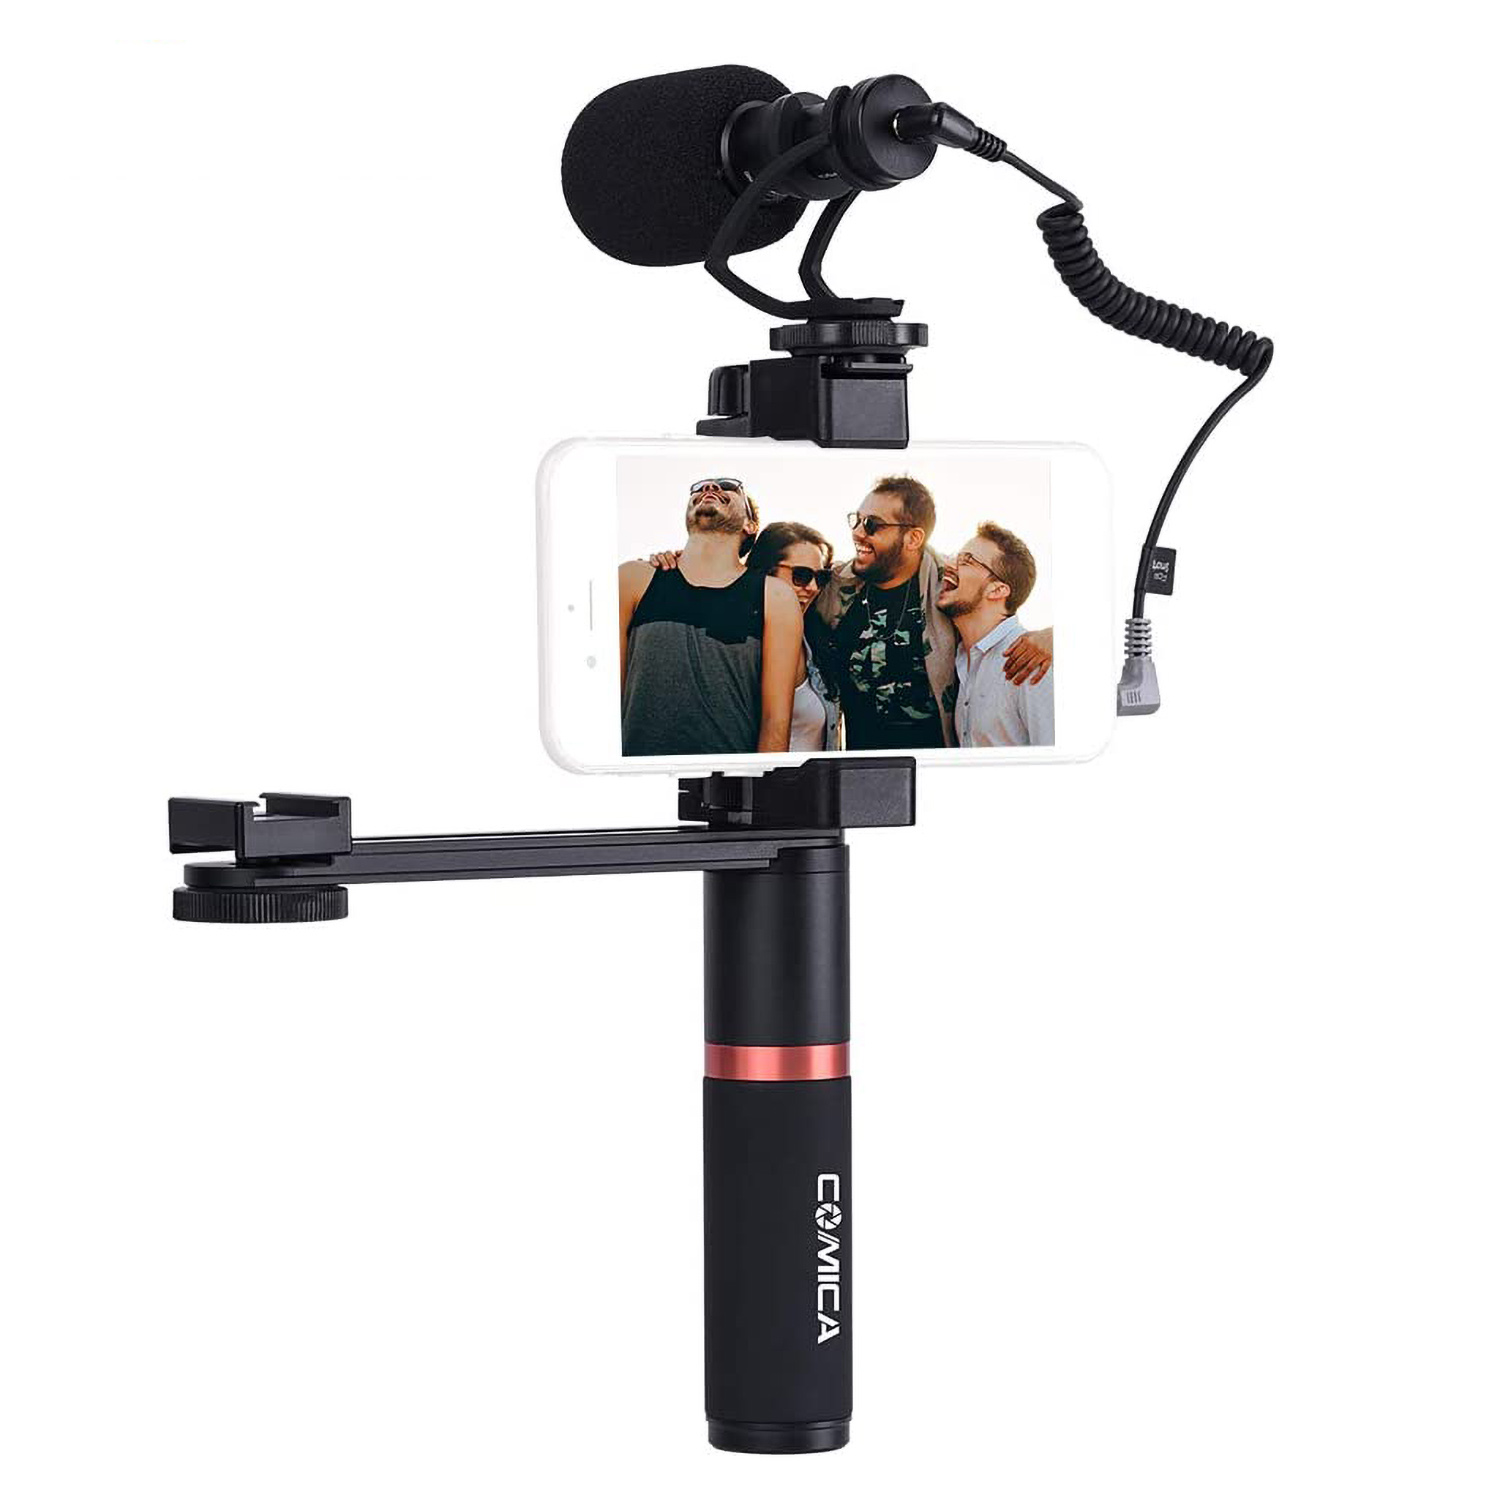 Comica Smartphone/iPhone Filmmaker Video Kit w/Mini Tripod - Black Shotgun Microphone and Phone Holder CVM-Vm10-K2 